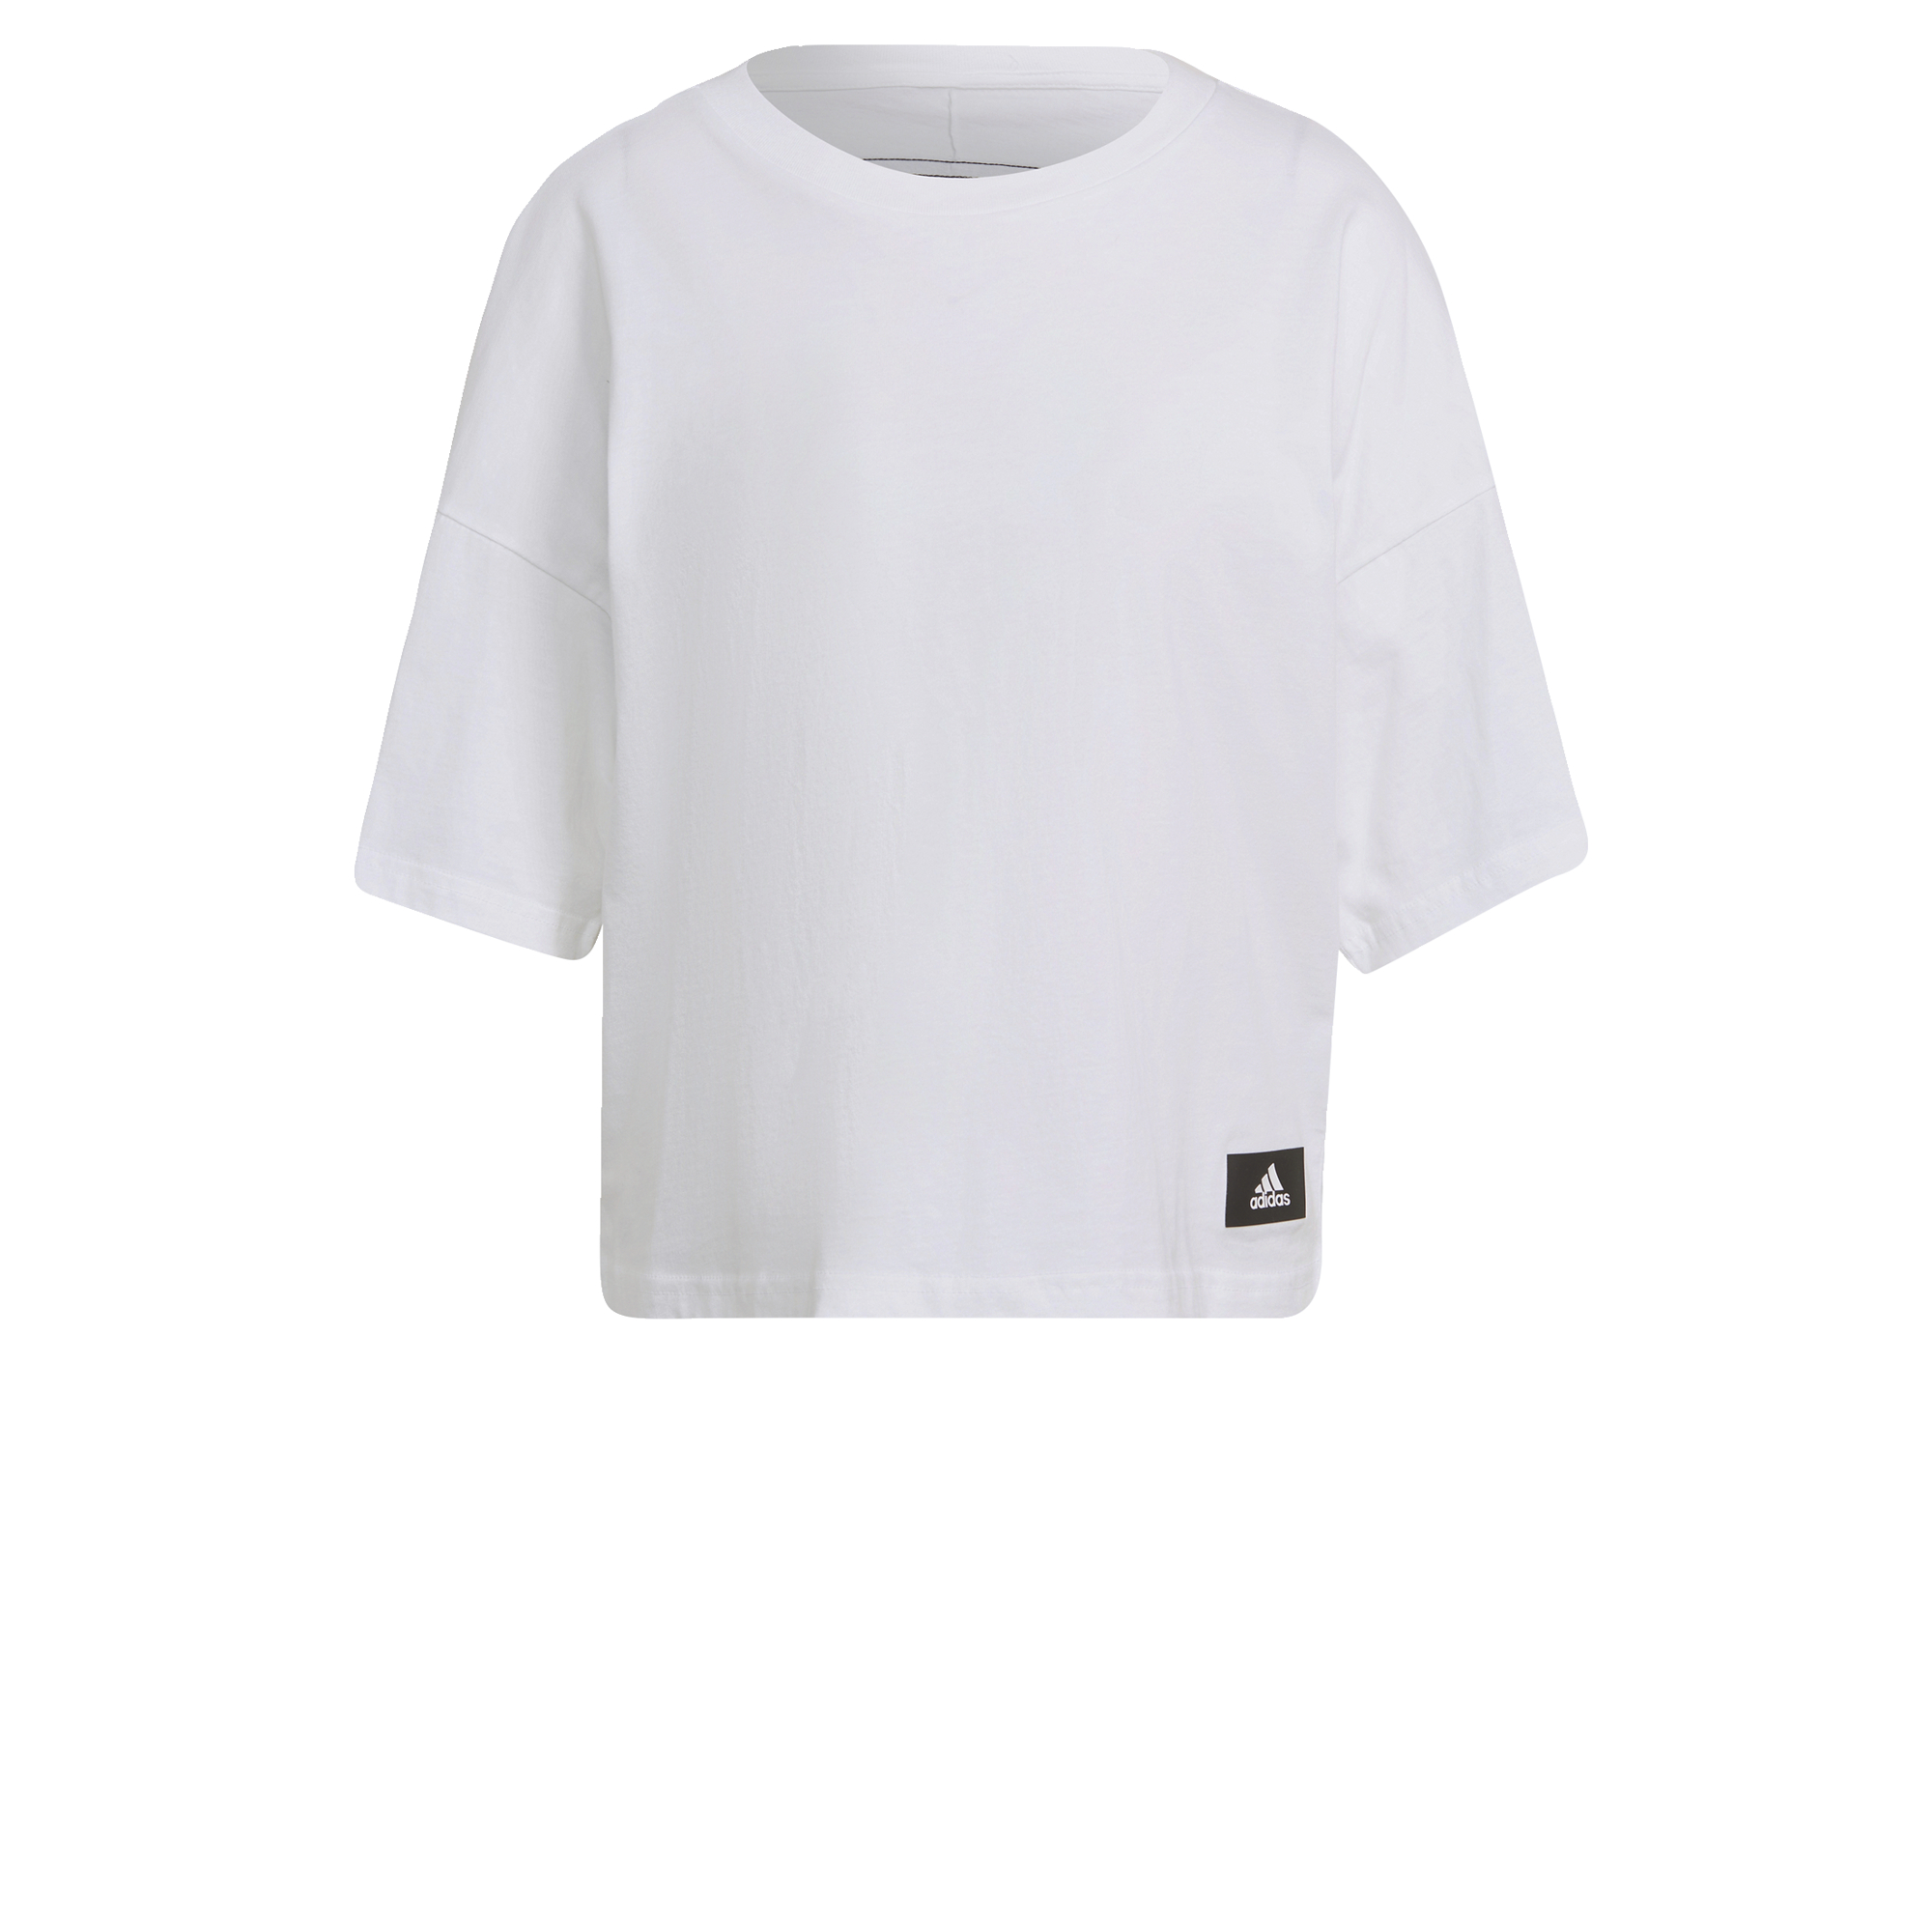 Adidas White Shirt ราคาถูก ซื้อออนไลน์ที่ - ส.ค. 2022 | Lazada.co.th